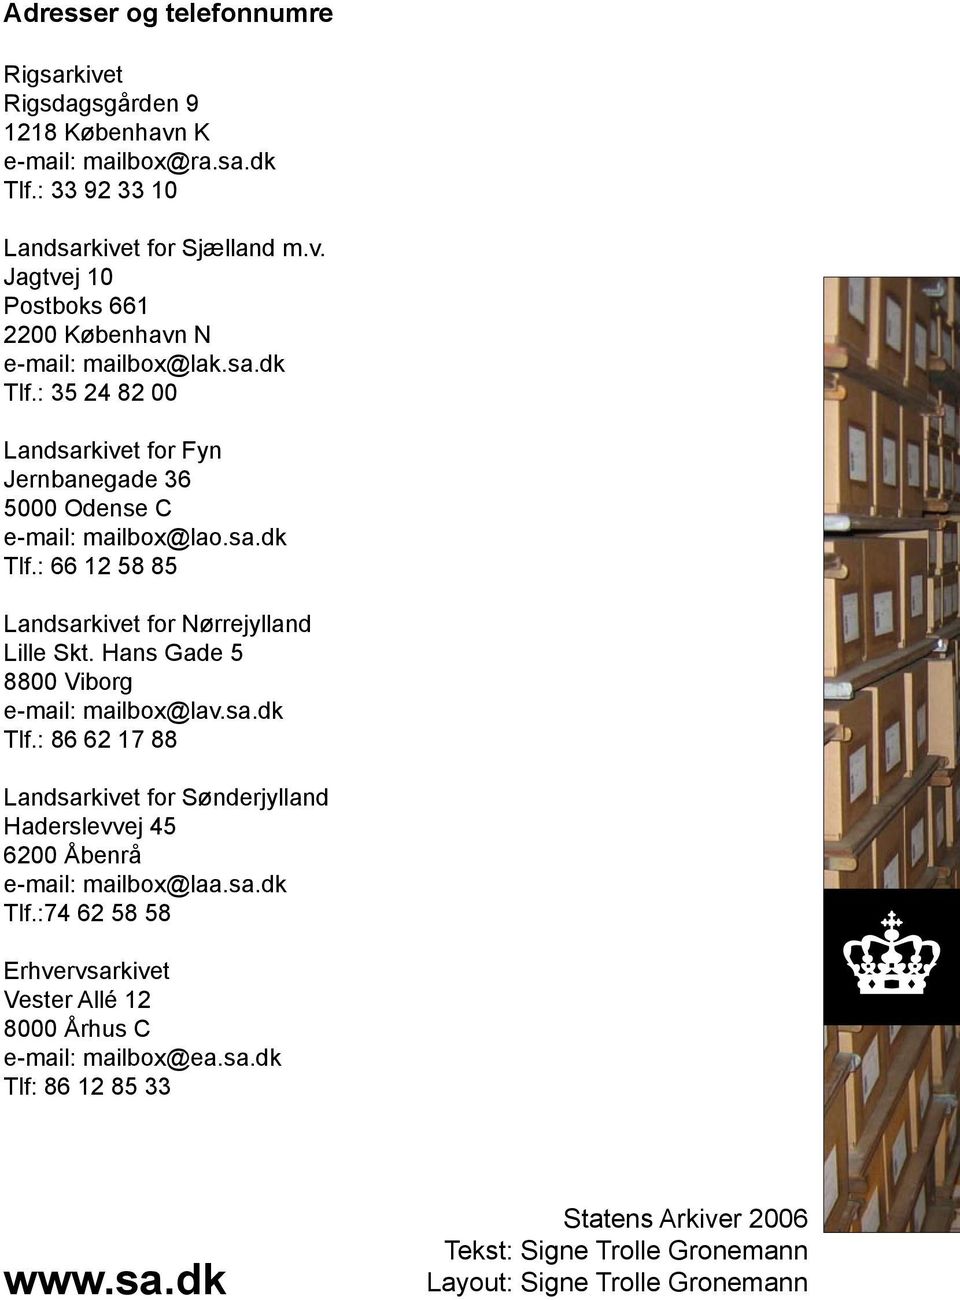 Hans Gade 5 8800 Viborg e-mail: mailbox@lav.sa.dk Tlf.: 86 62 17 88 Landsarkivet for Sønderjylland Haderslevvej 45 6200 Åbenrå e-mail: mailbox@laa.sa.dk Tlf.:74 62 58 58 Erhvervsarkivet Vester Allé 12 8000 Århus C e-mail: mailbox@ea.